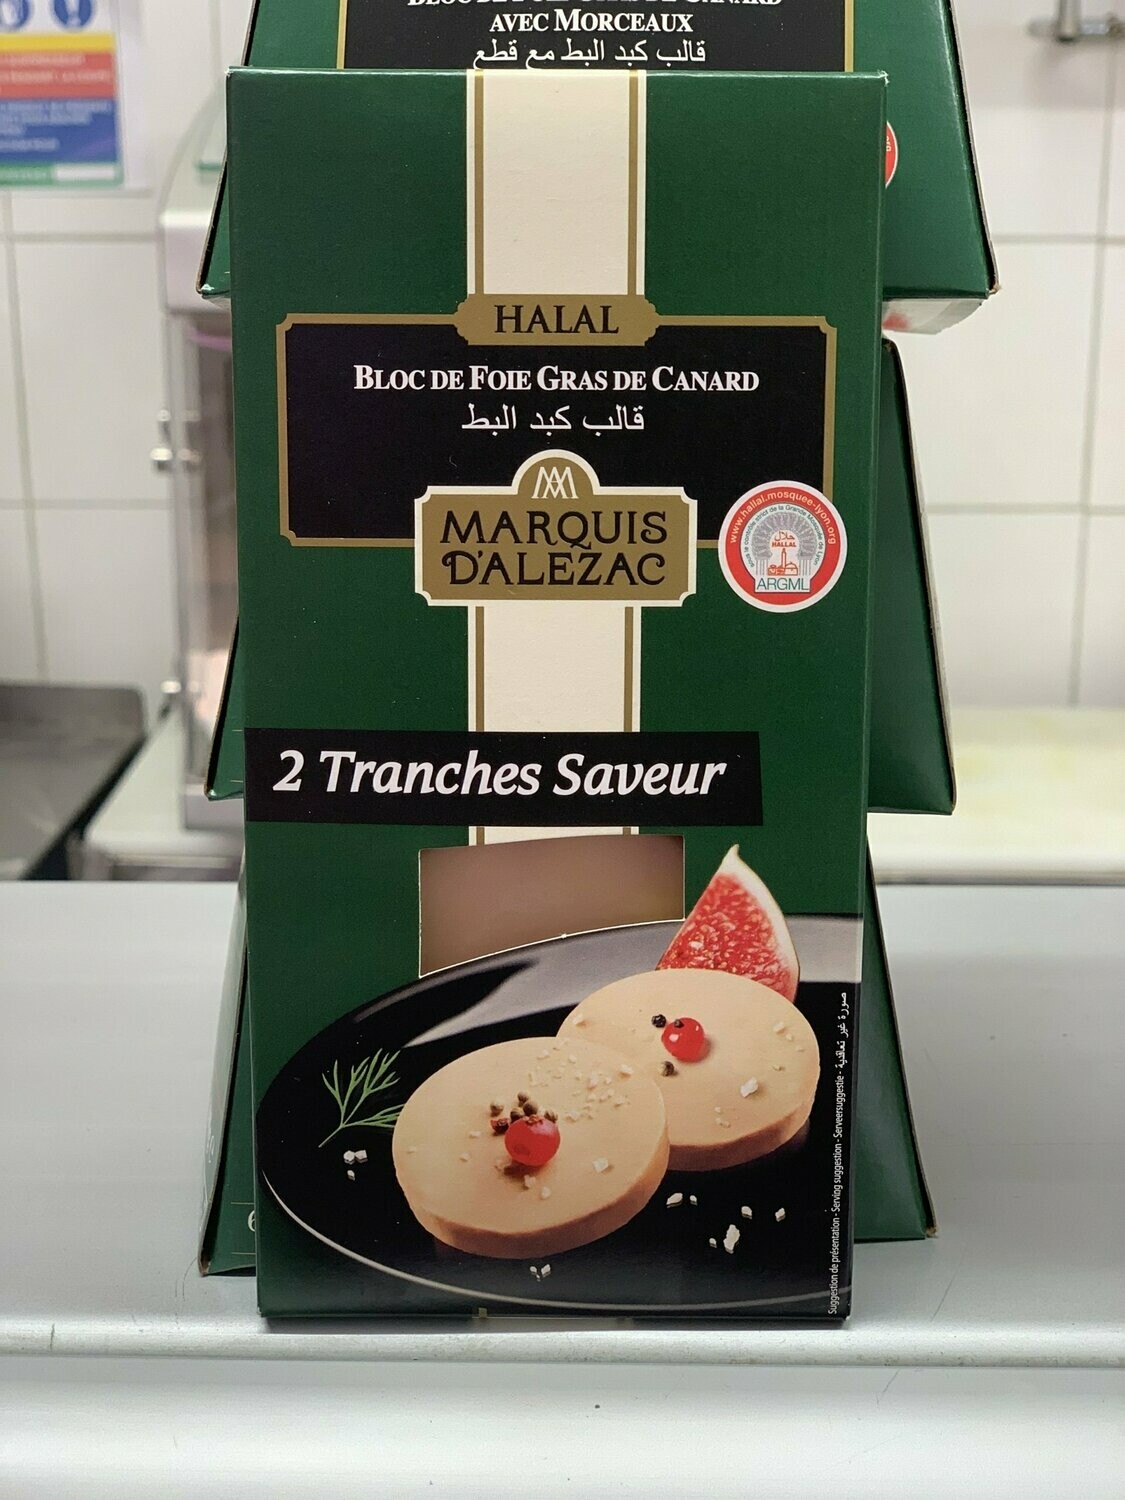 2 Tranches Foie Gras de Canard Halal - Marquis d'Alezac - 75g